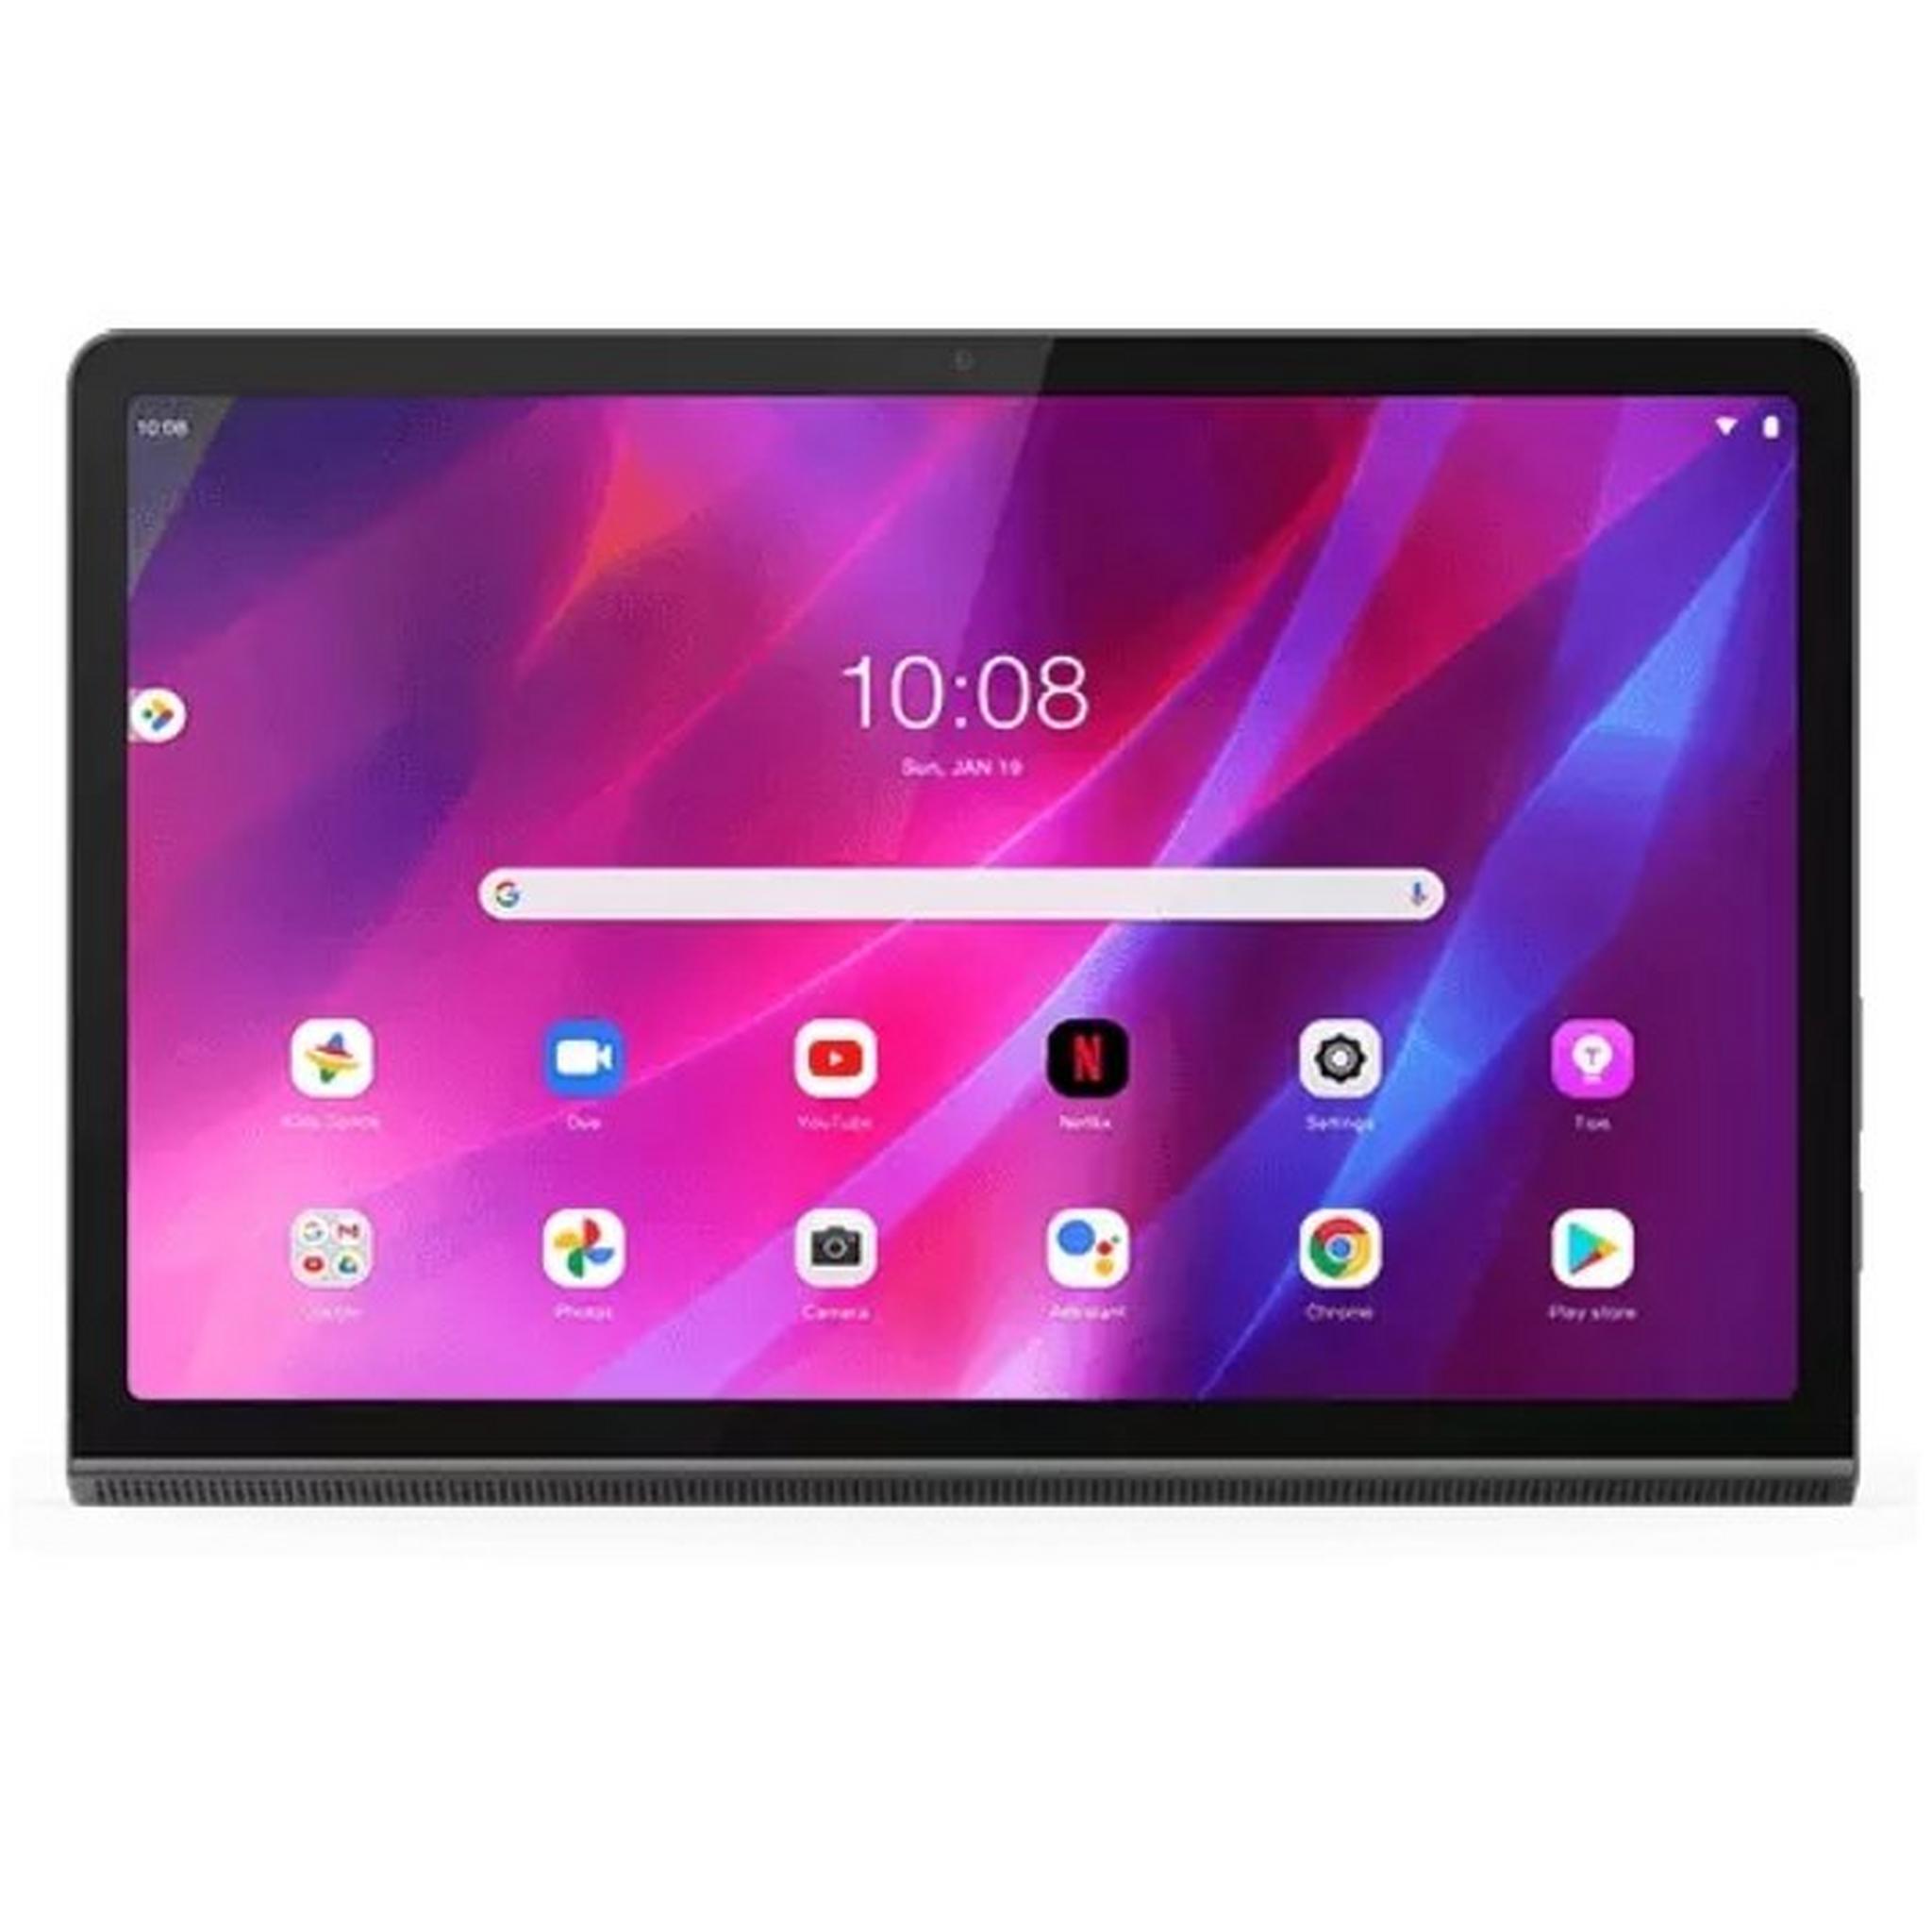 Lenovo Yoga Tab 11 256GB, 4G, 11-inch Tablet - Grey